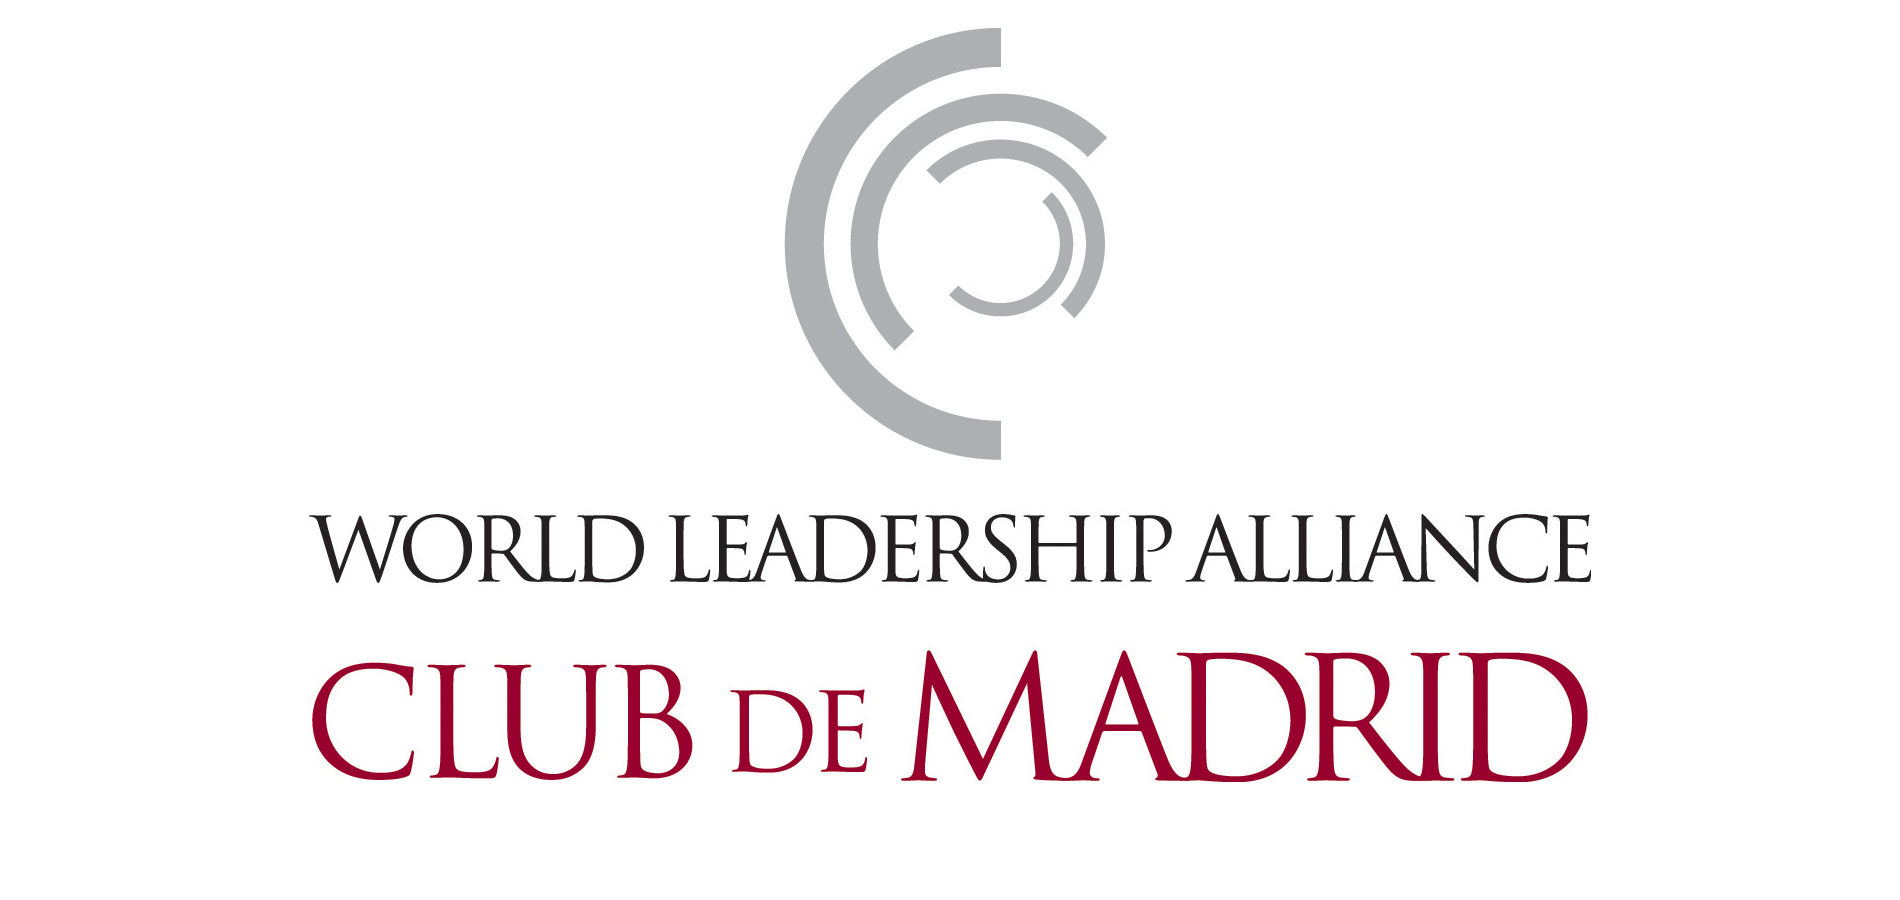 Statement by the Board of Directors of Club de Madrid on Belarus